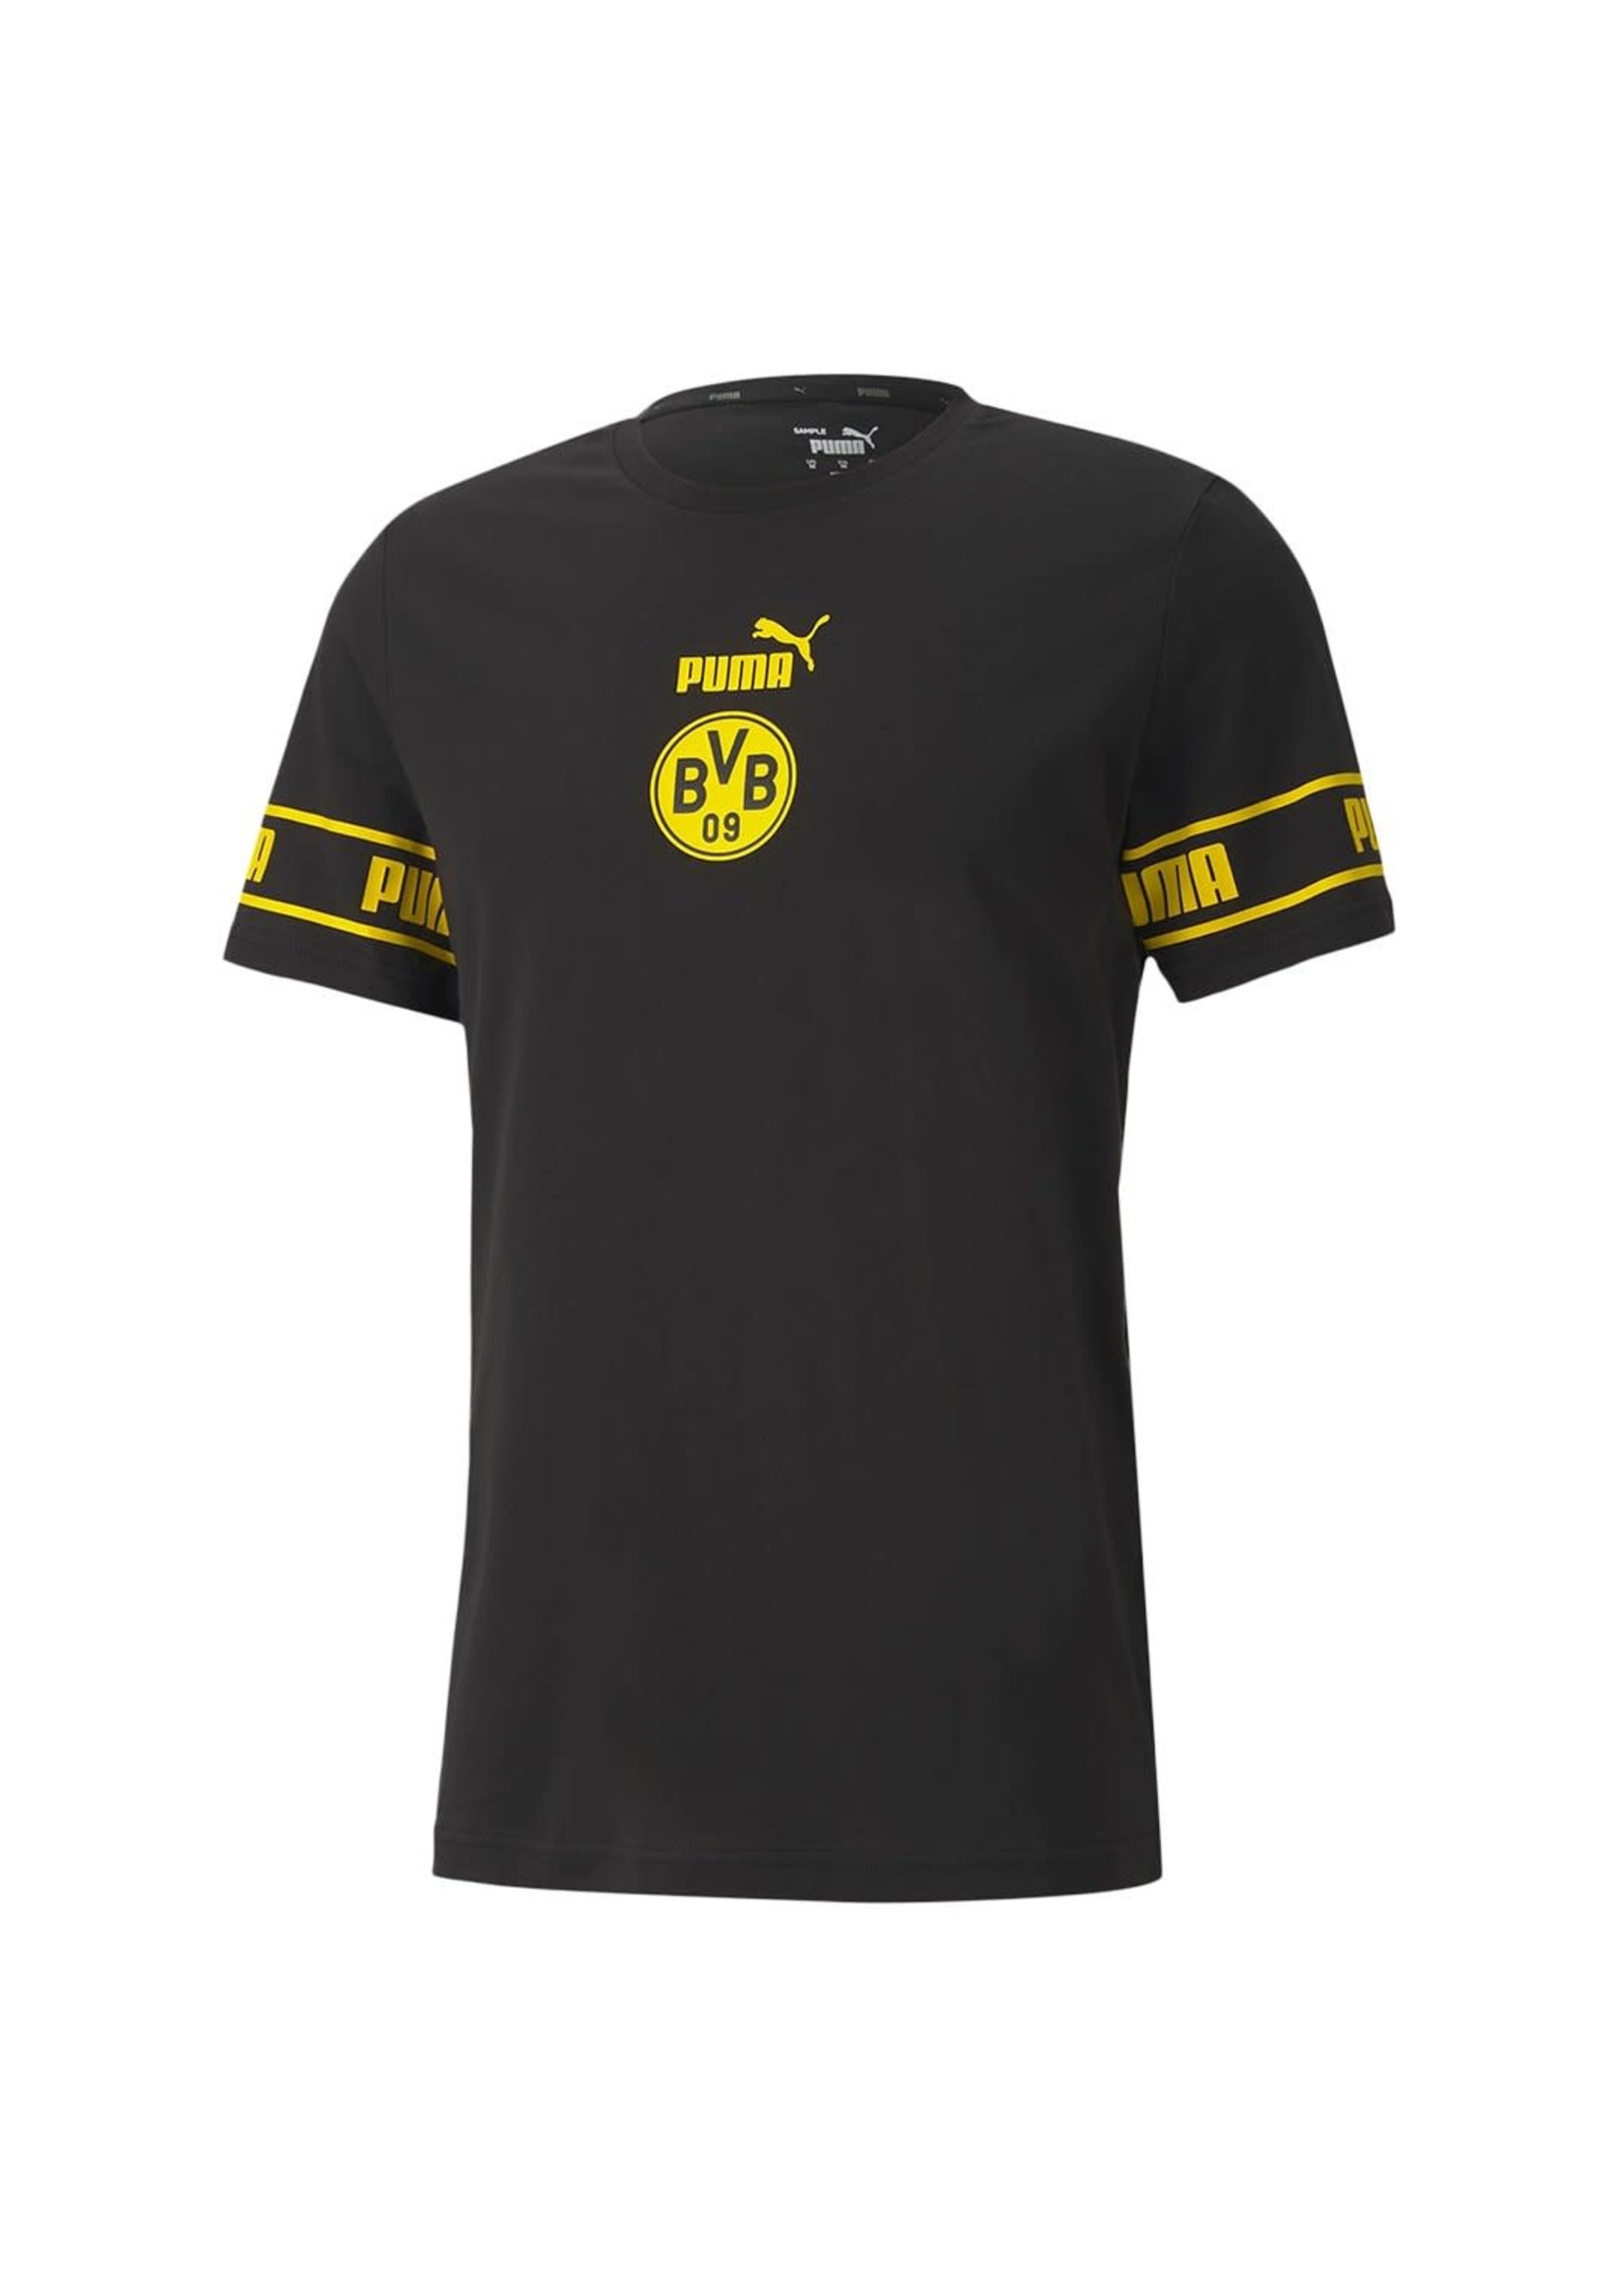 Puma Borussia Dortmund T-Shirt - 20/21 Away